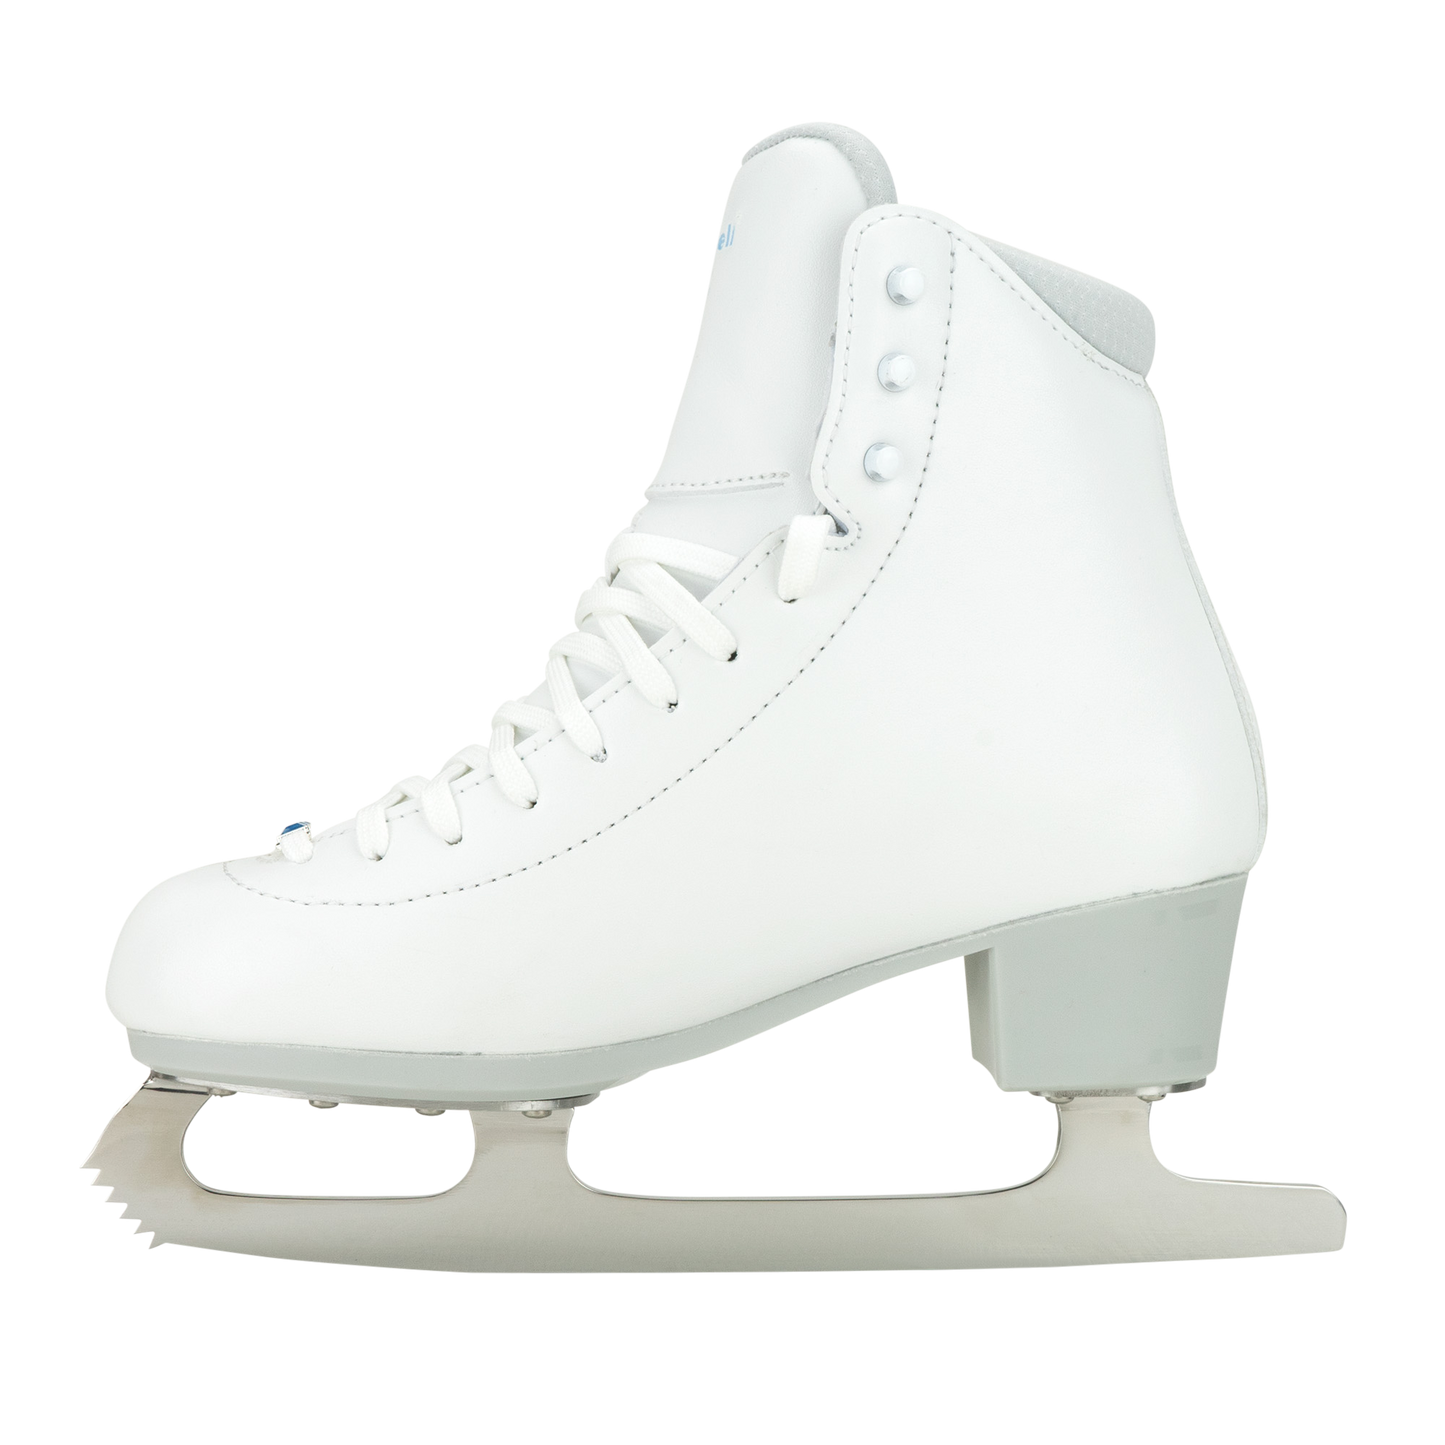 Riedell White Topaz Ice Figure Skating Skate